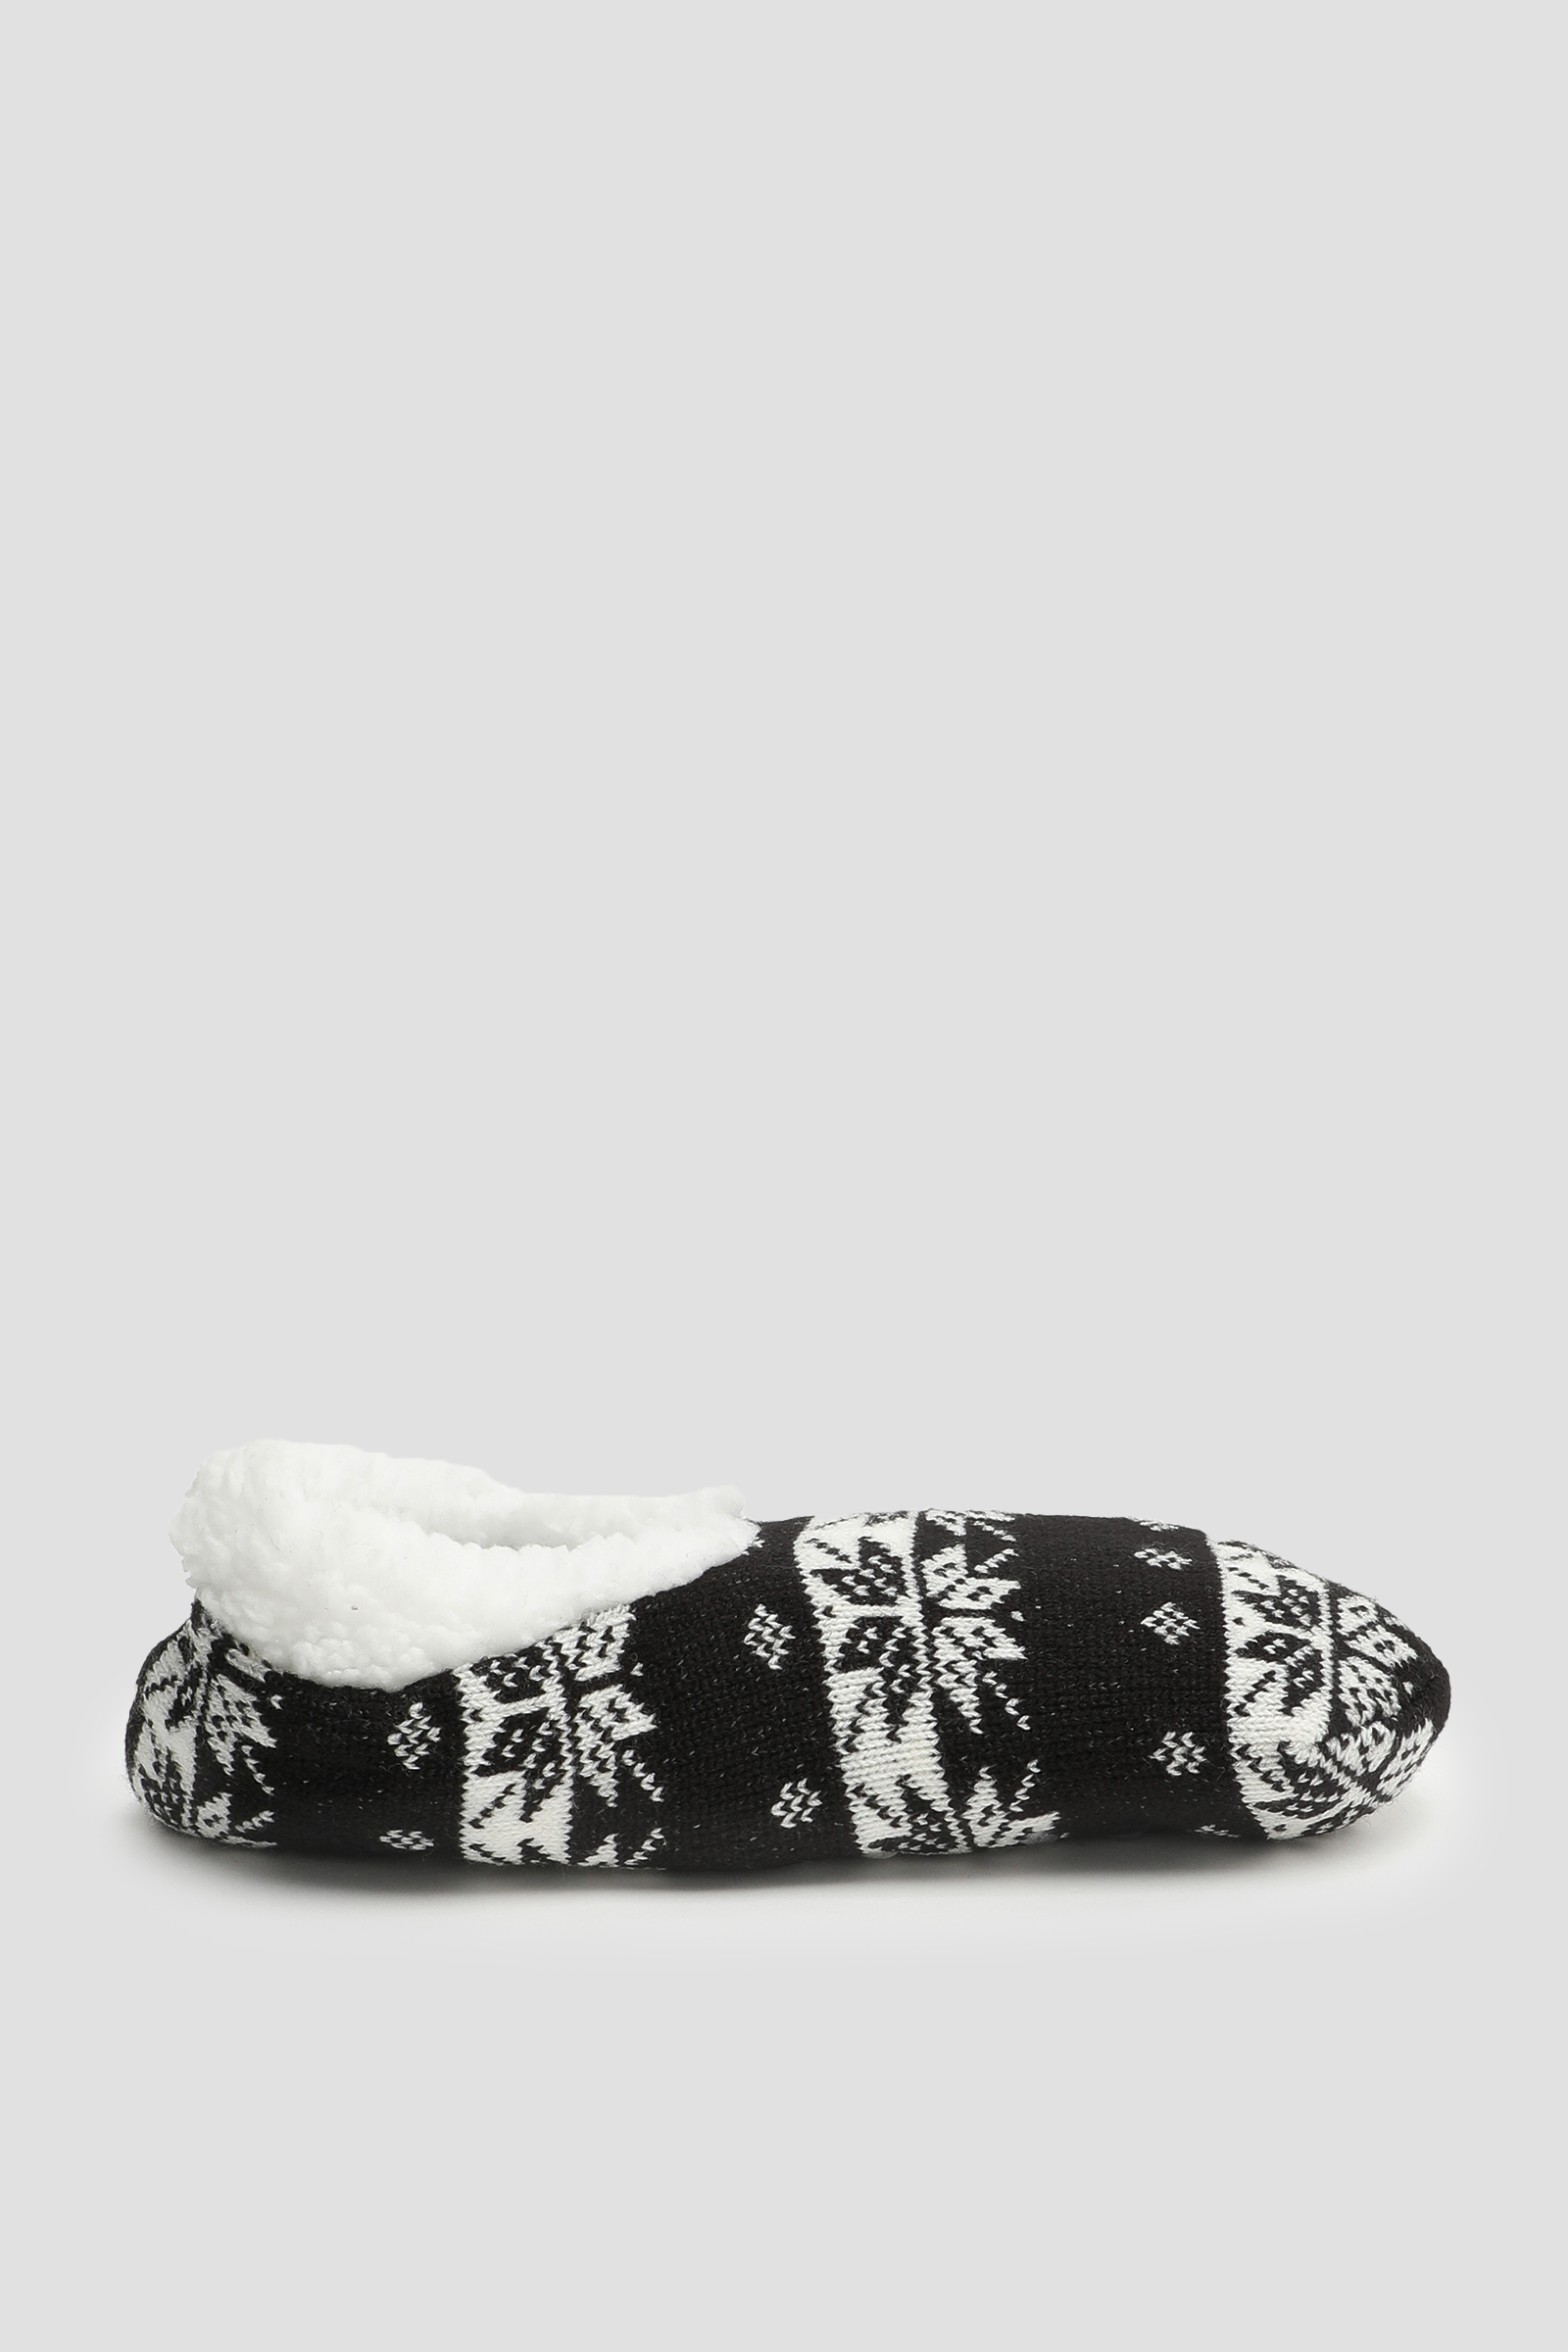 Ardene Snowflake Slipper Socks in Black | Size Small | Polyester